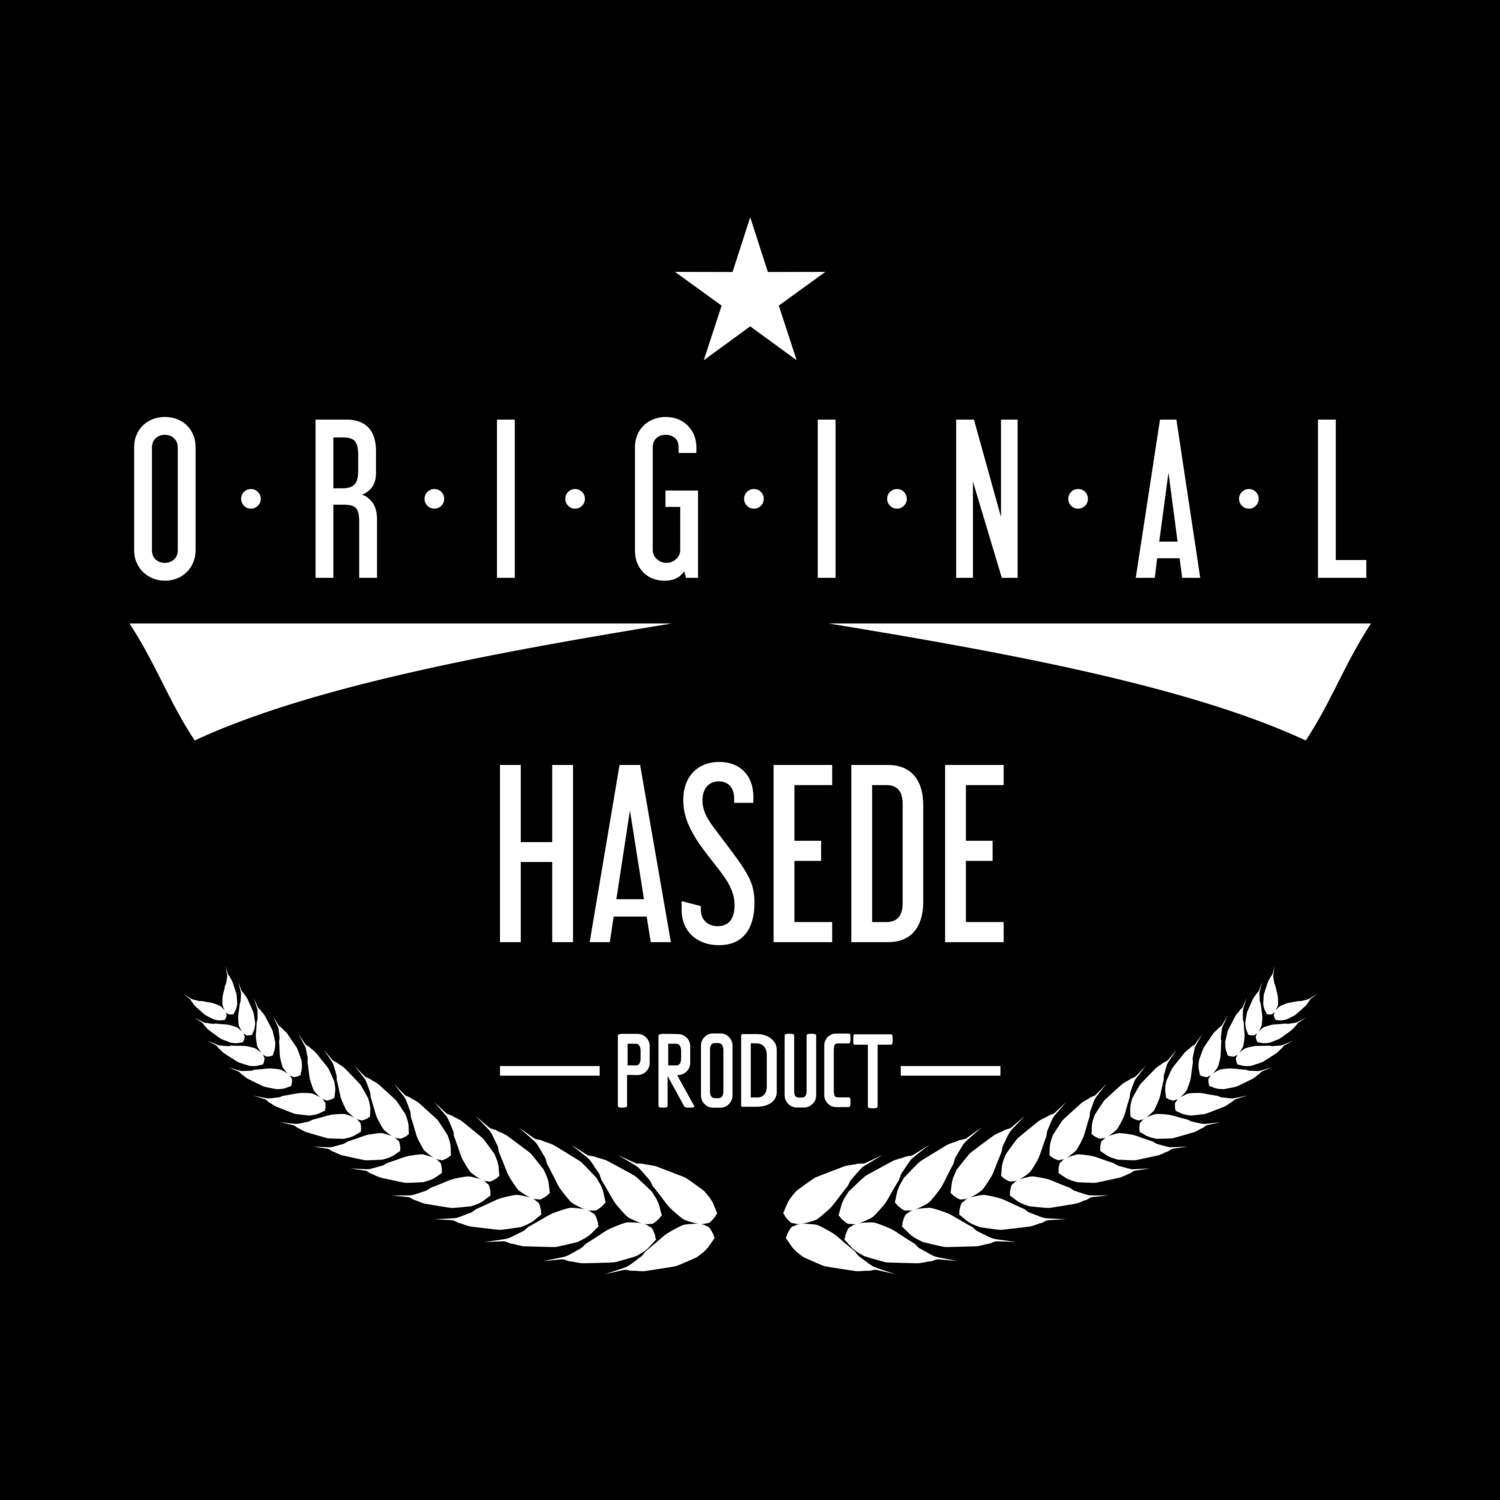 Hasede T-Shirt »Original Product«